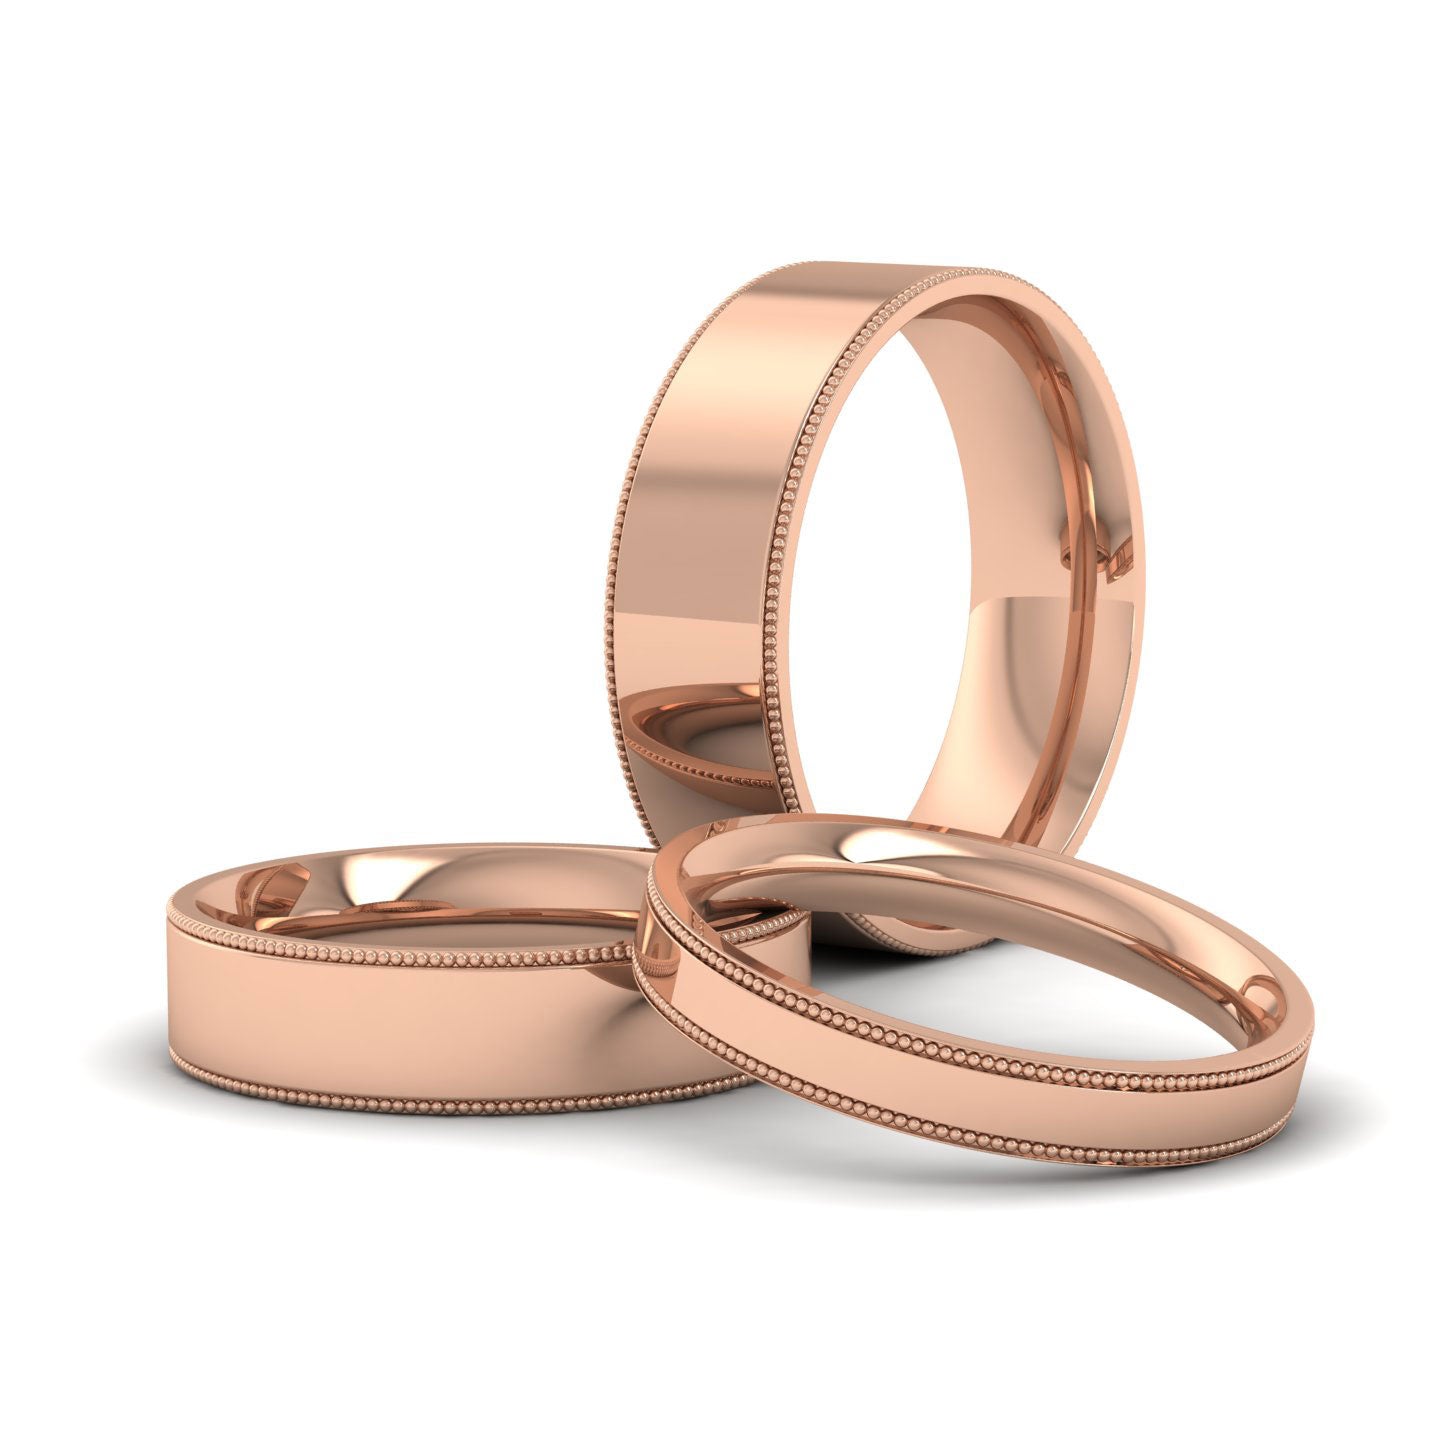 Millgrain Edge 18ct Rose Gold 5mm Flat Comfort Fit Wedding Ring G